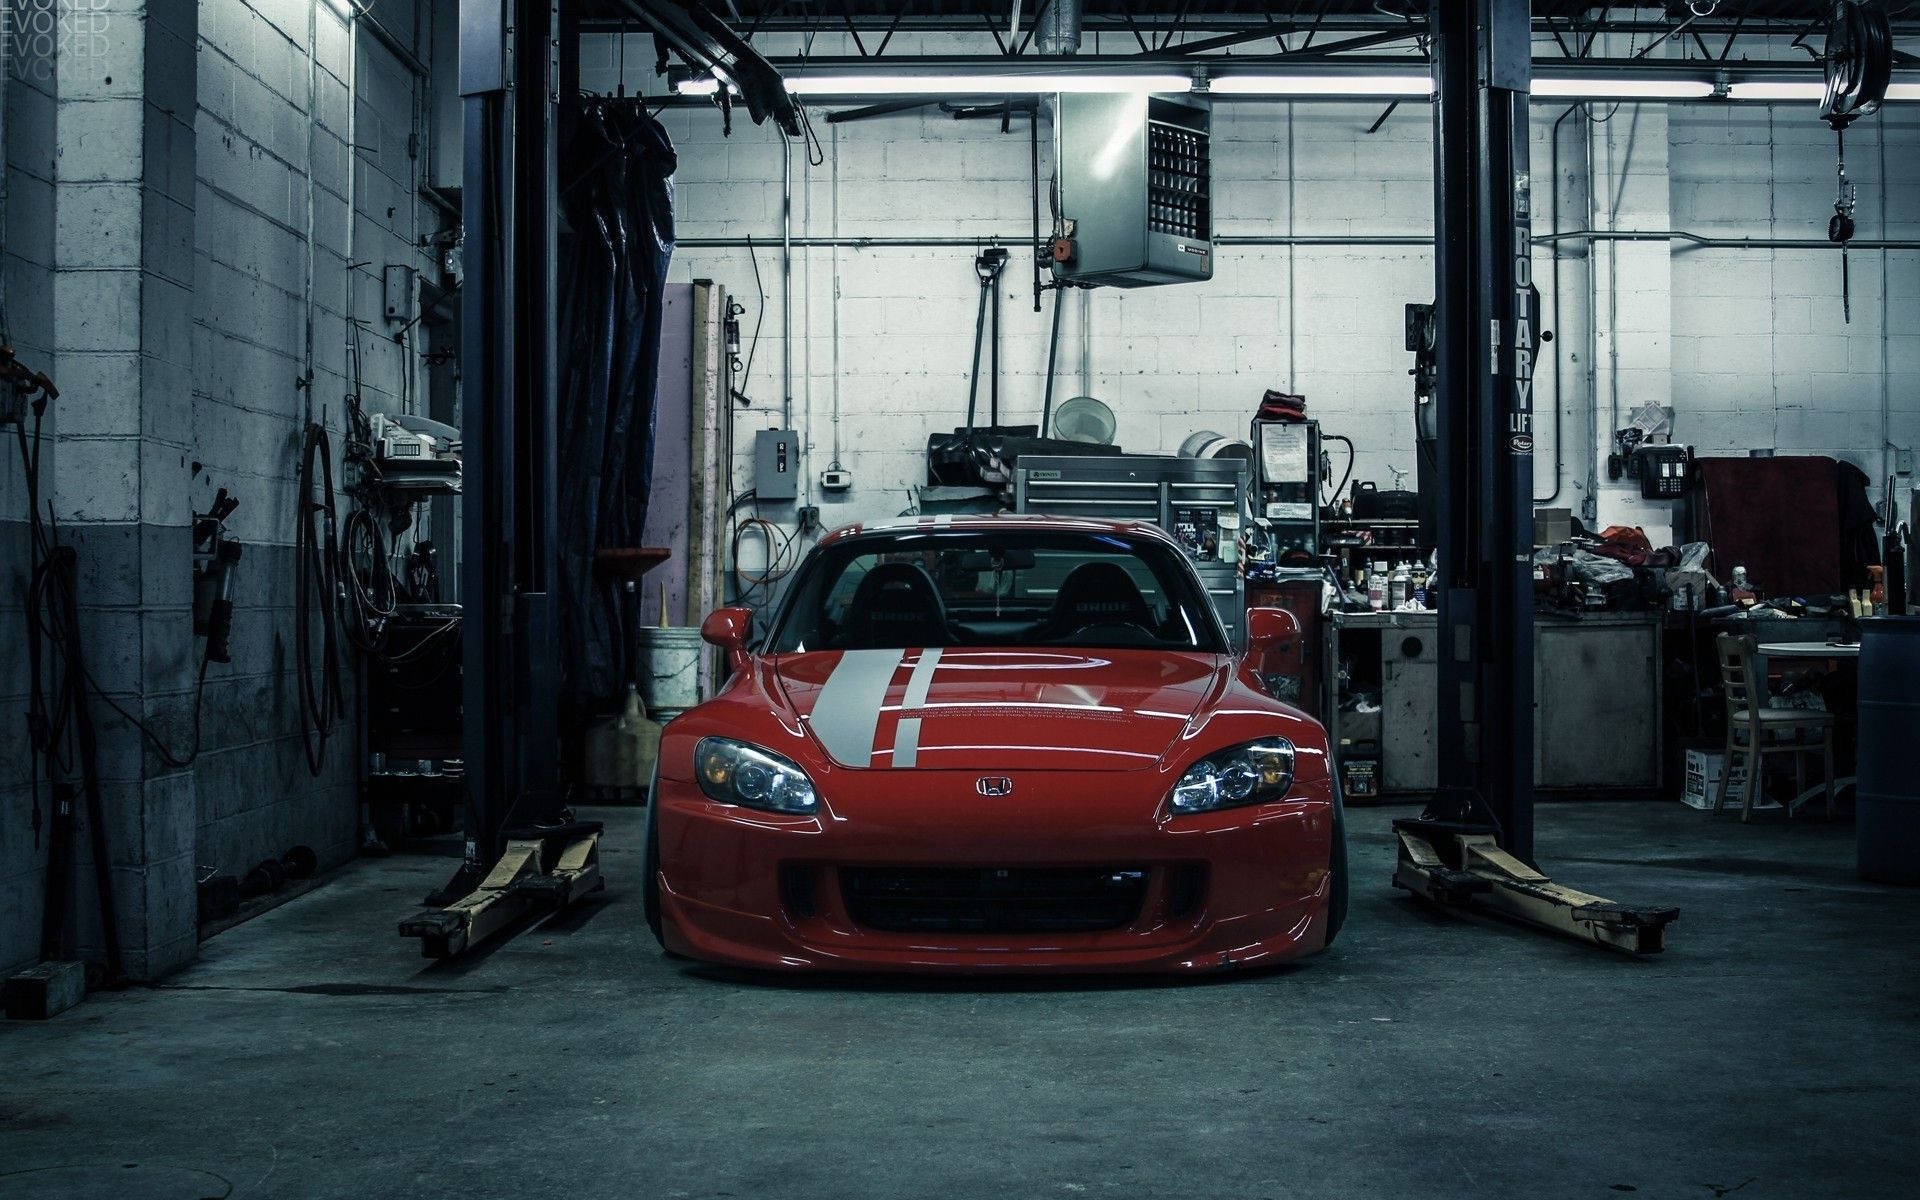 Red Jdm Honda S2000 Garage Background